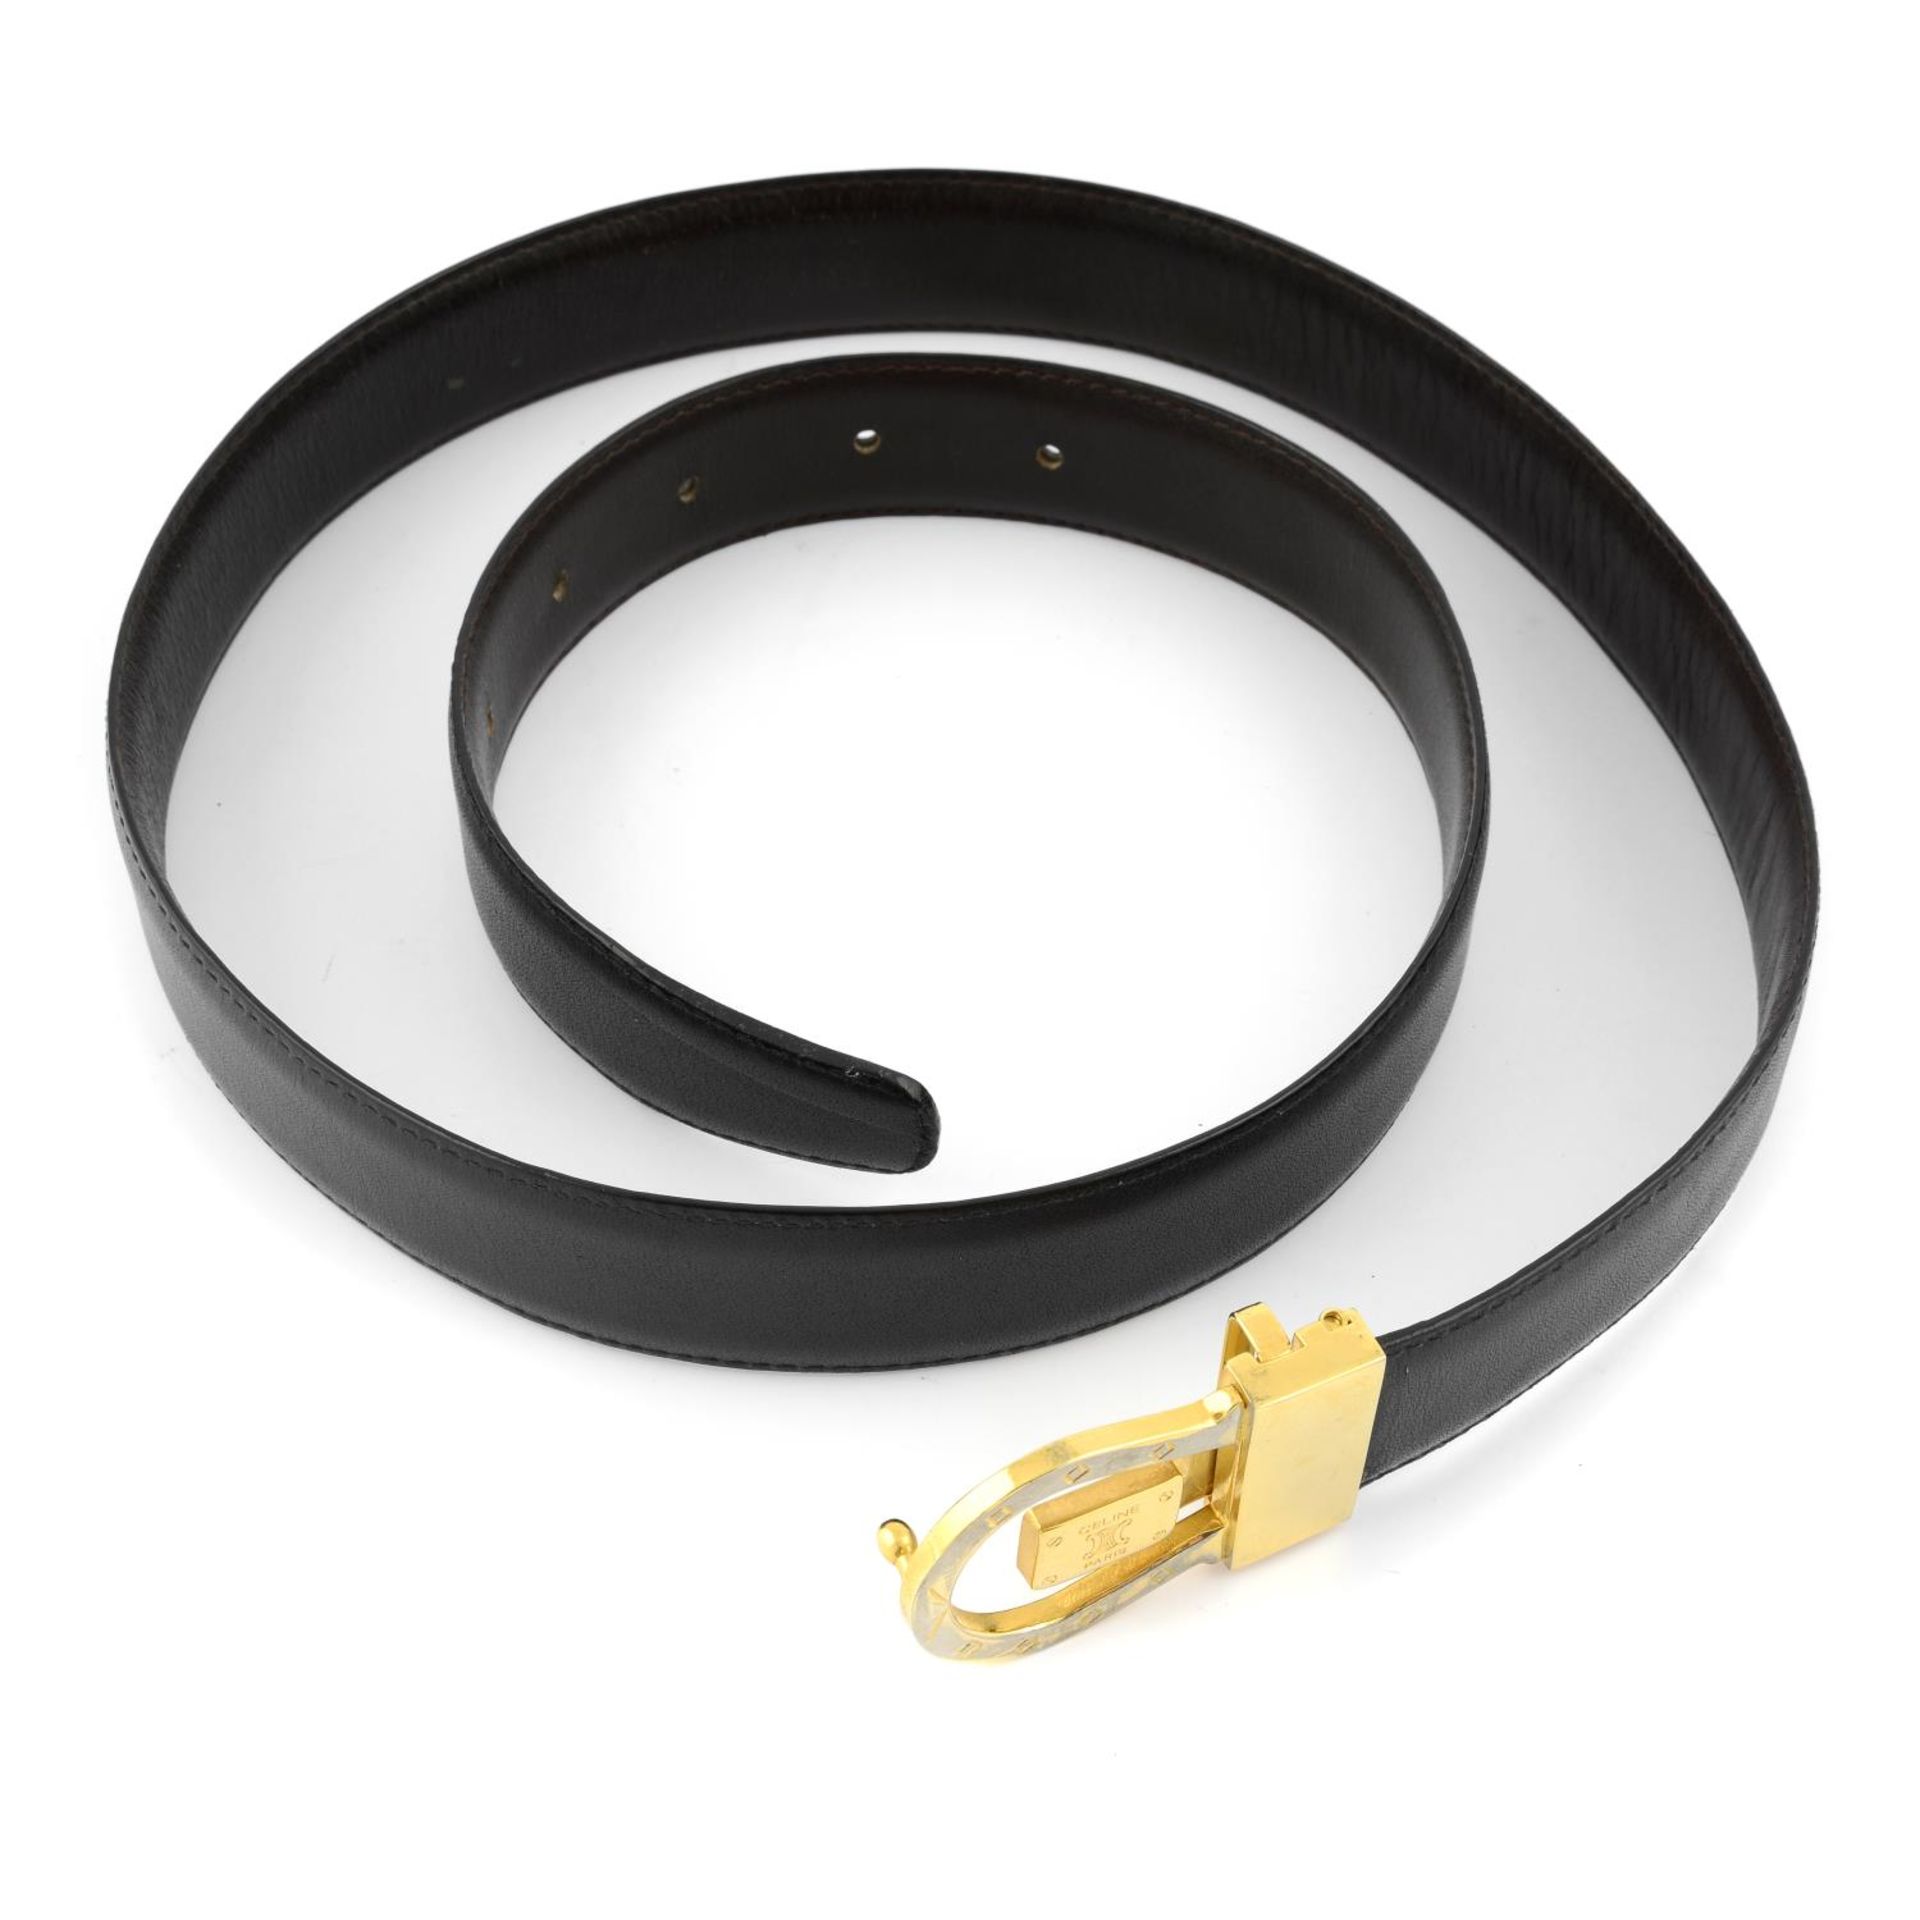 CÉLINE - a black leather belt. - Bild 2 aus 3